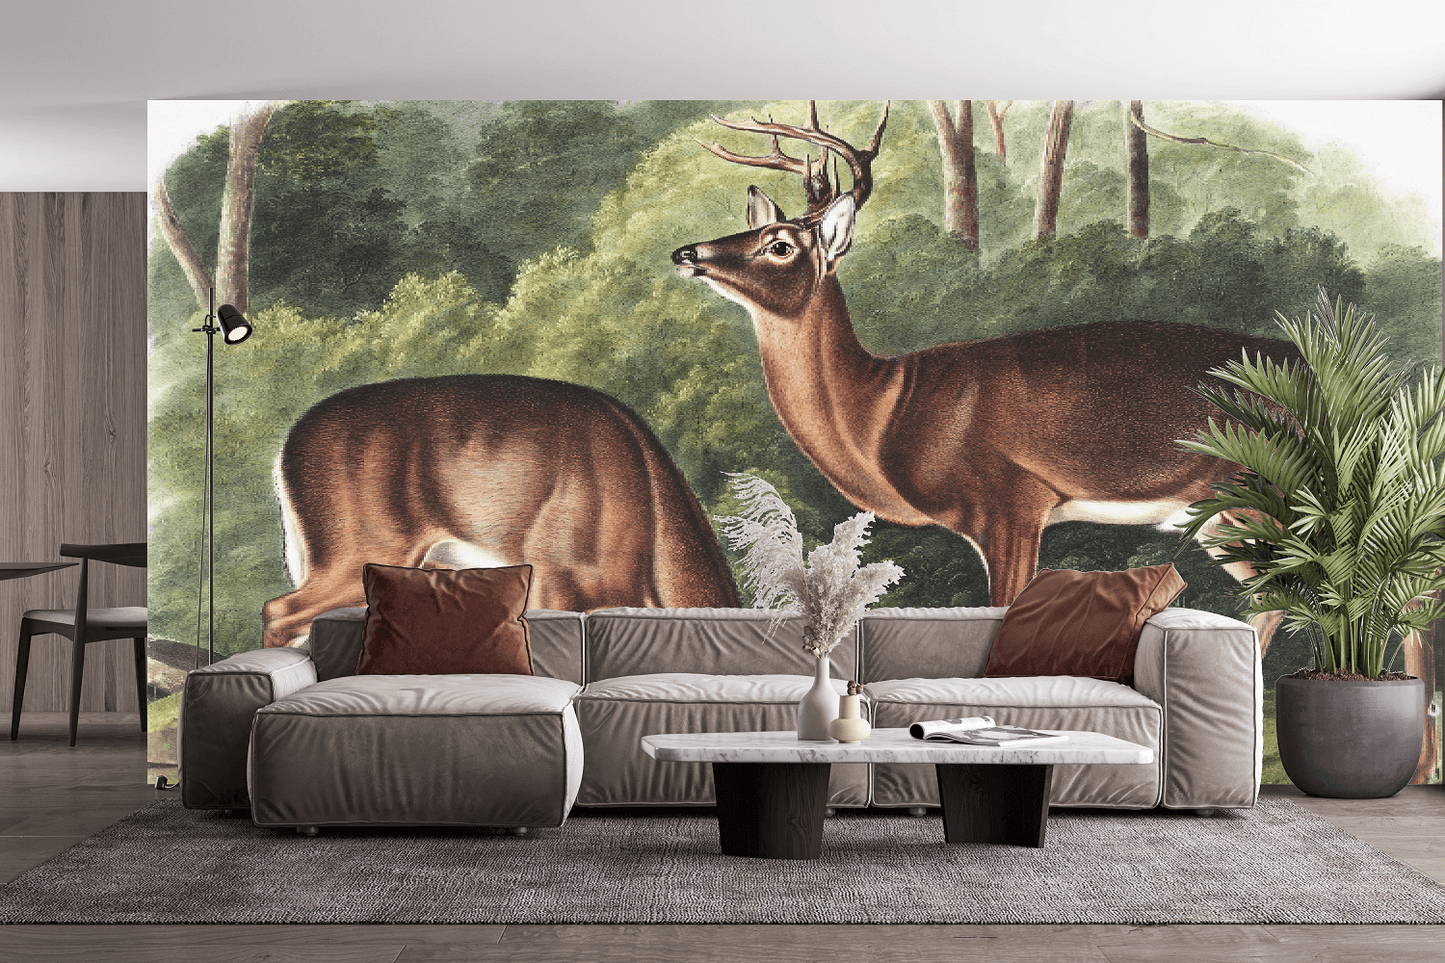 Deer by J.J. Audubon Mural Wallpaper (SqM)